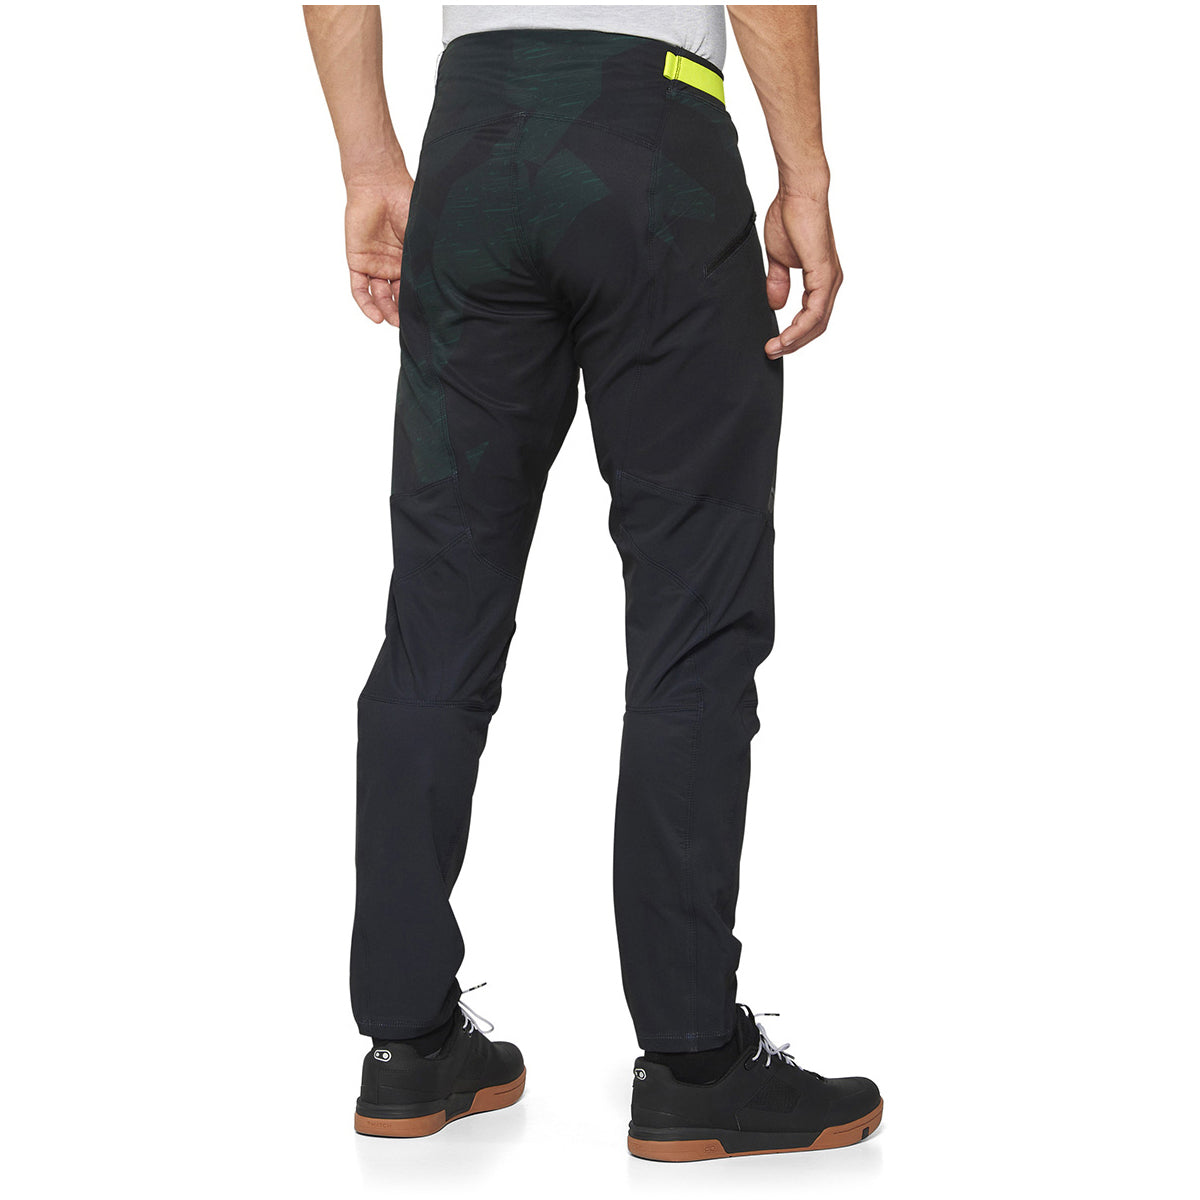 100 Percent Airmatic Limited Edition Pants - L-34 - Black Camo